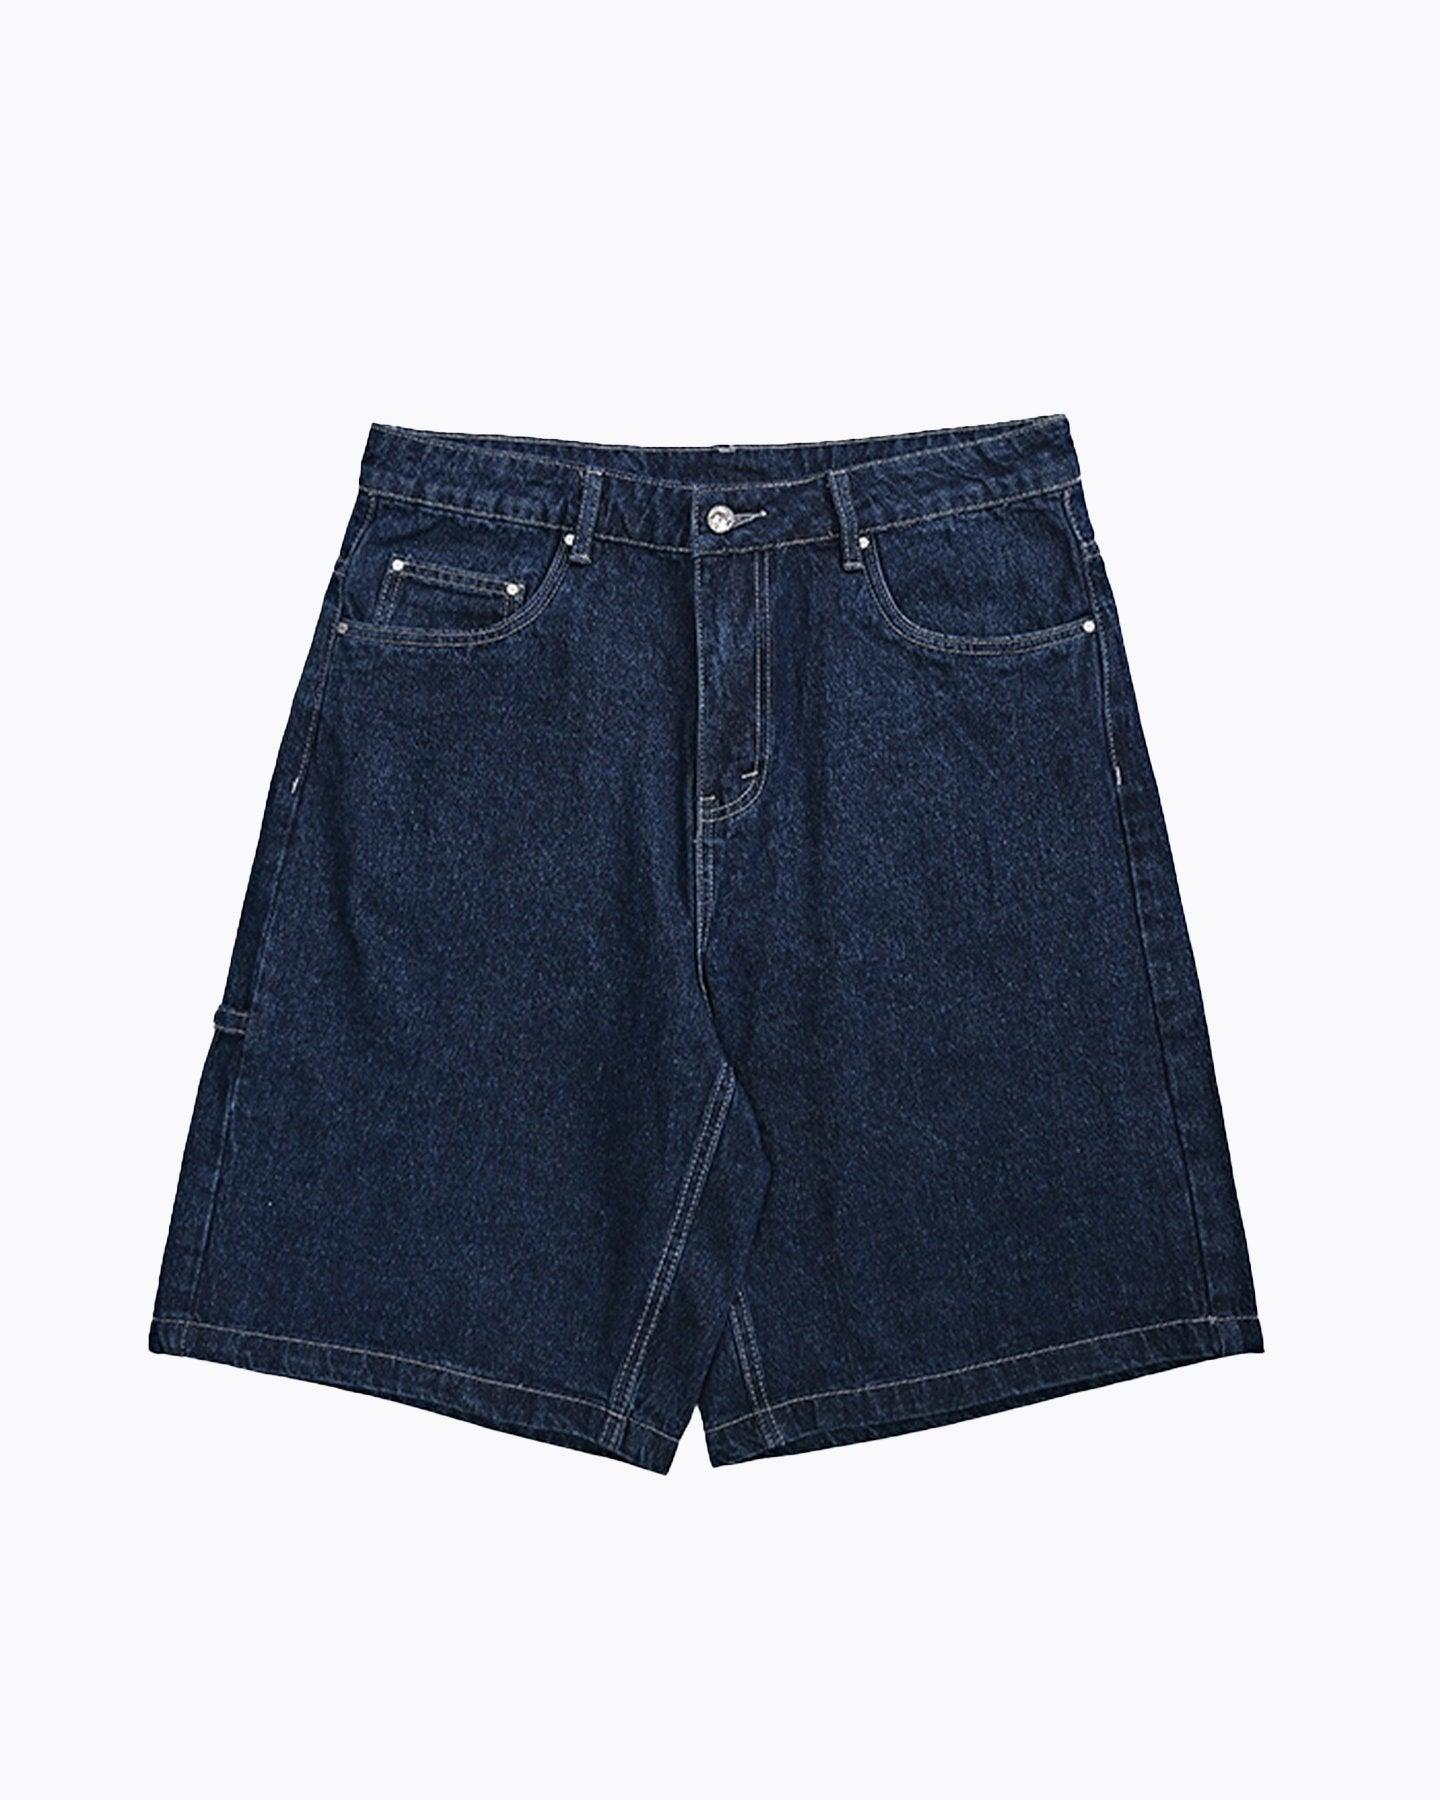 Sentient Official - SNT Dark Blue Carpenter Denim Shorts.  Clothing, shorts